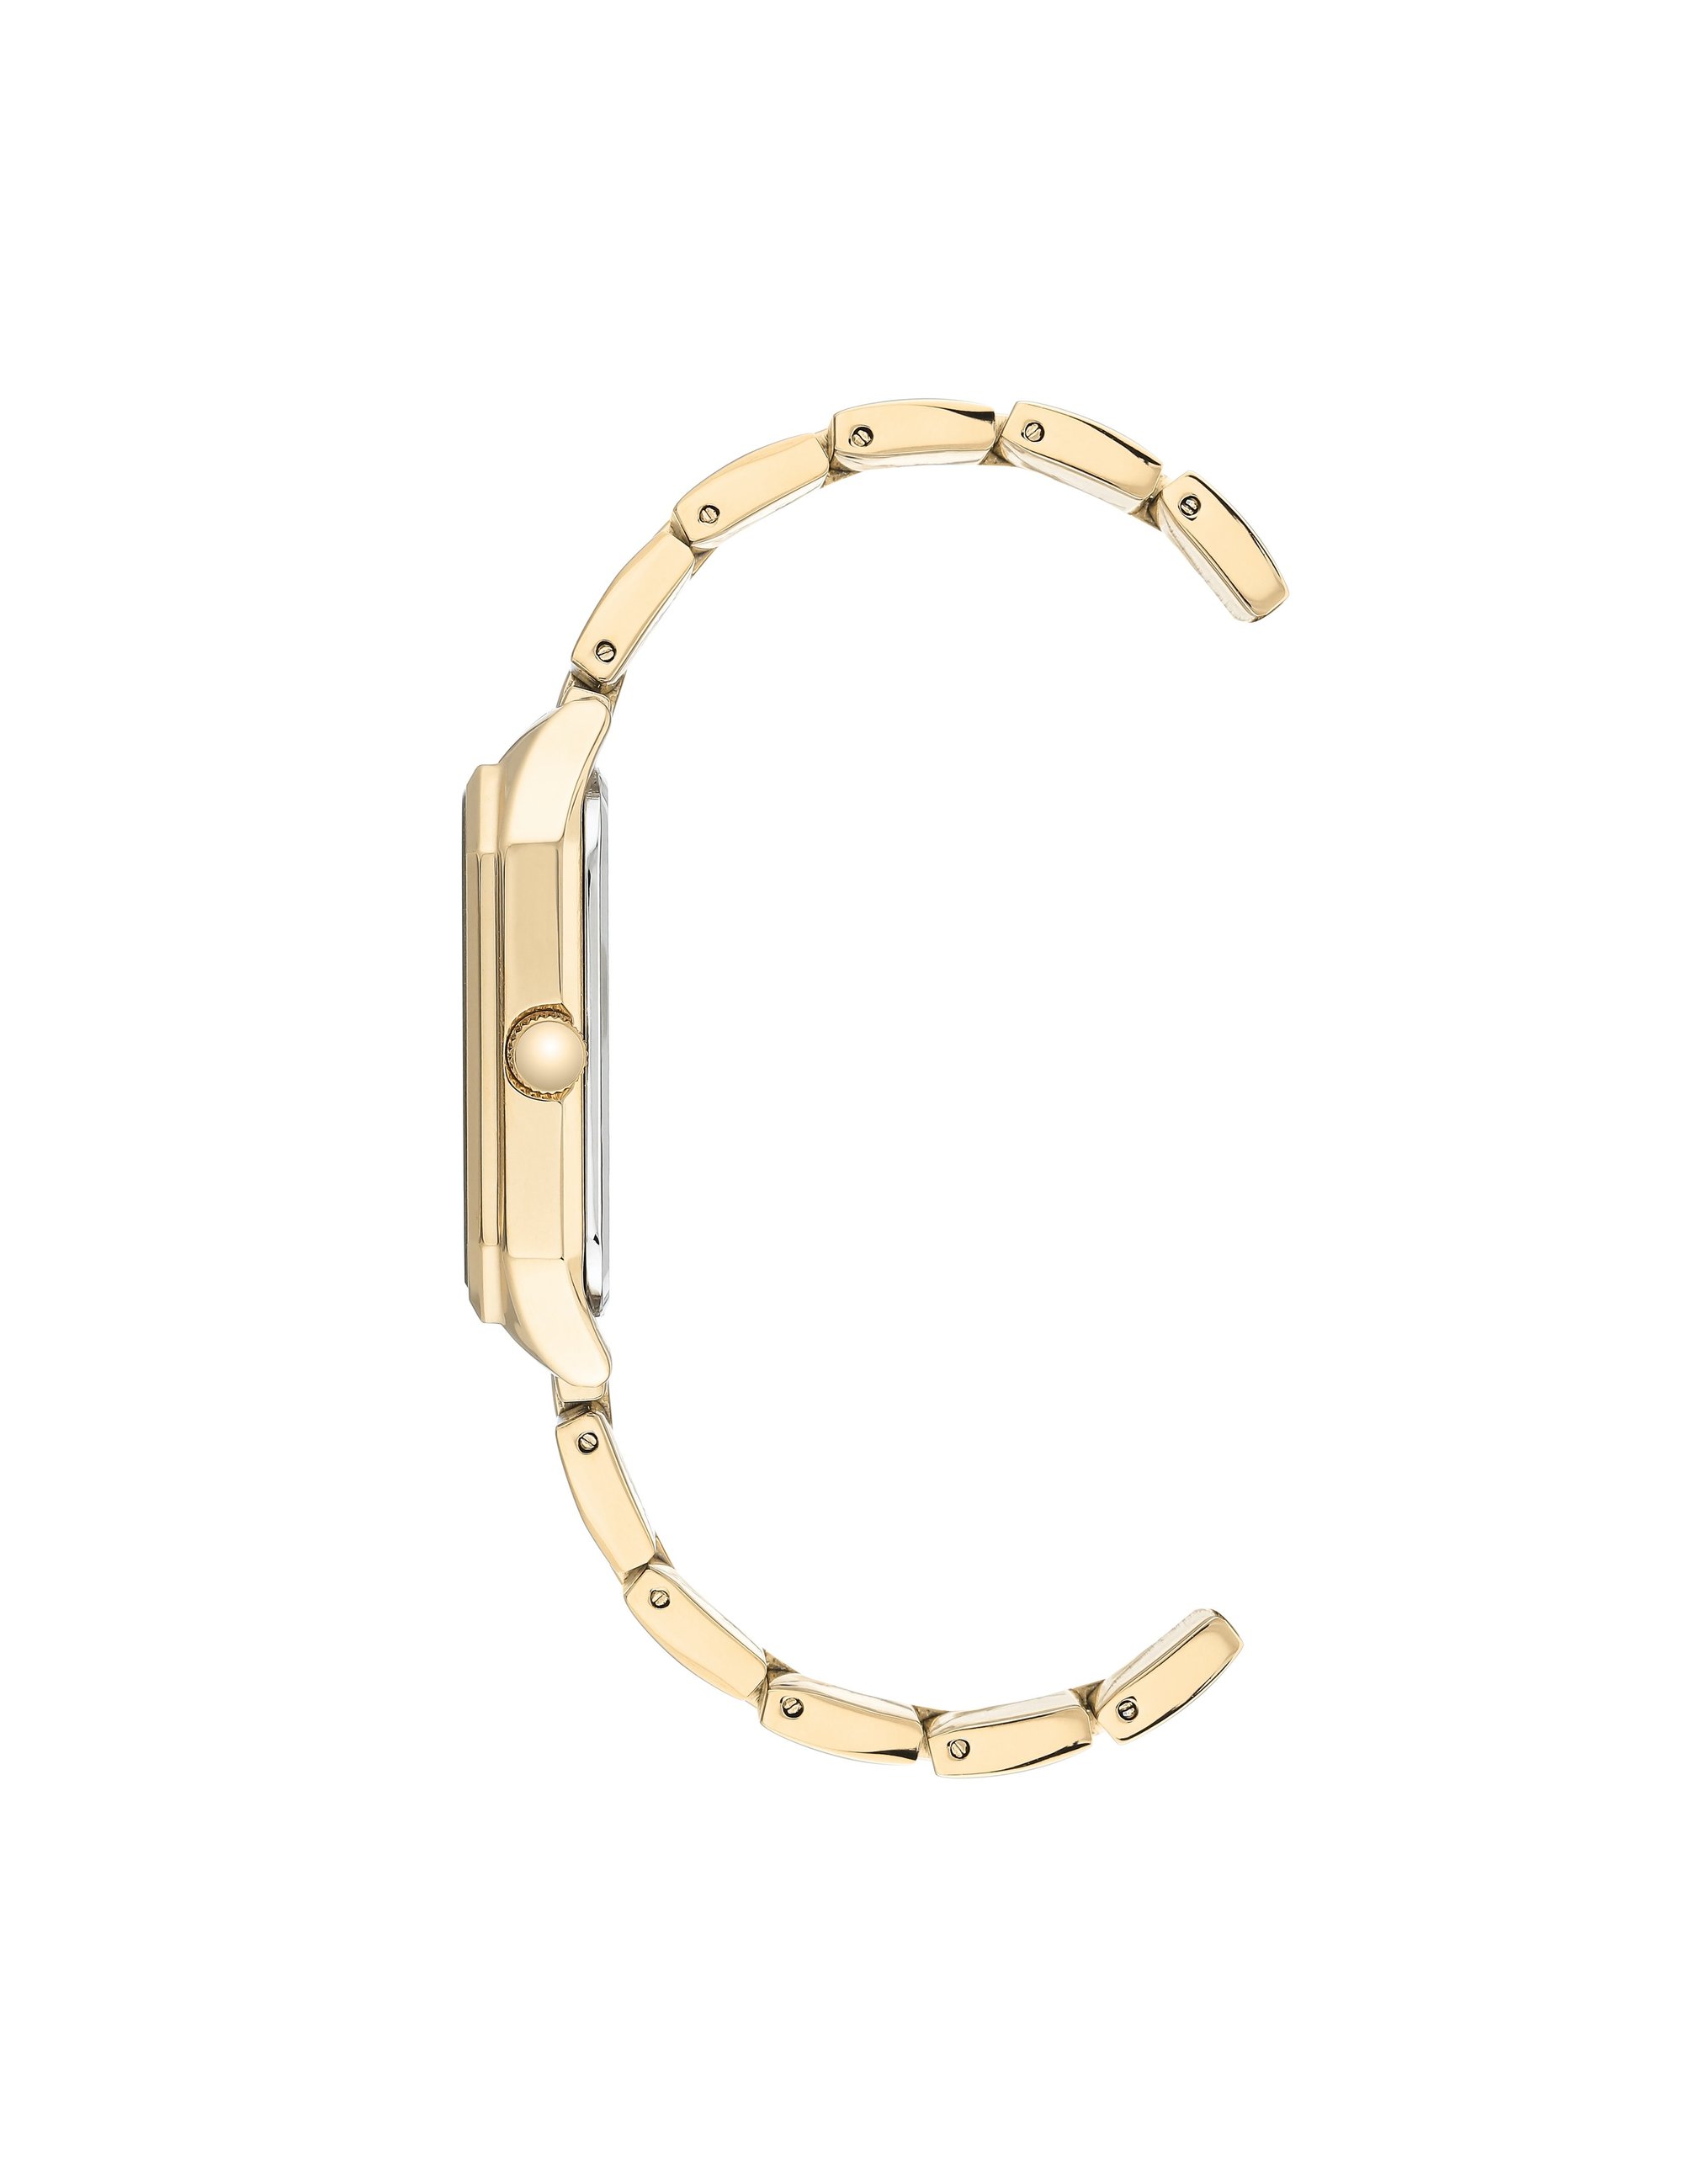 gold black bracelet watch octagon shaped case